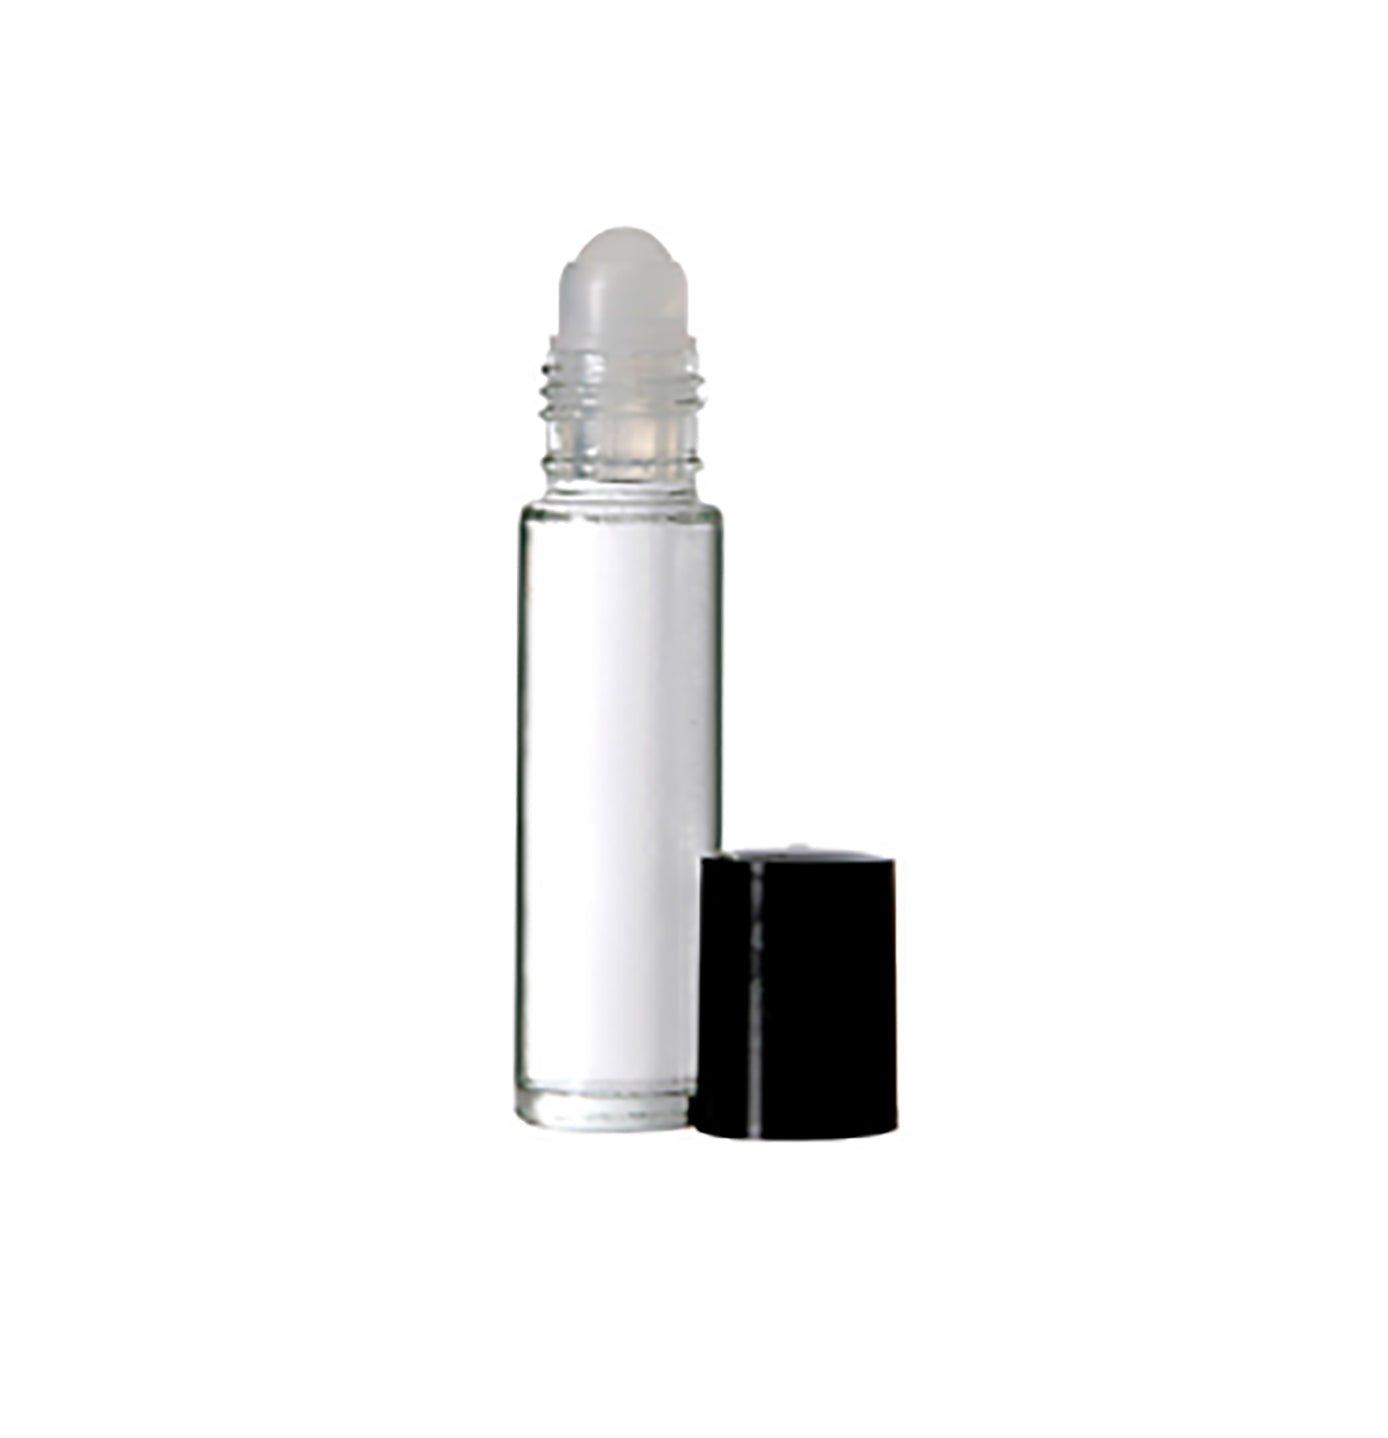 Chanel Coco Mademoiselle Type Body Oil (L) – E Perfume Bar